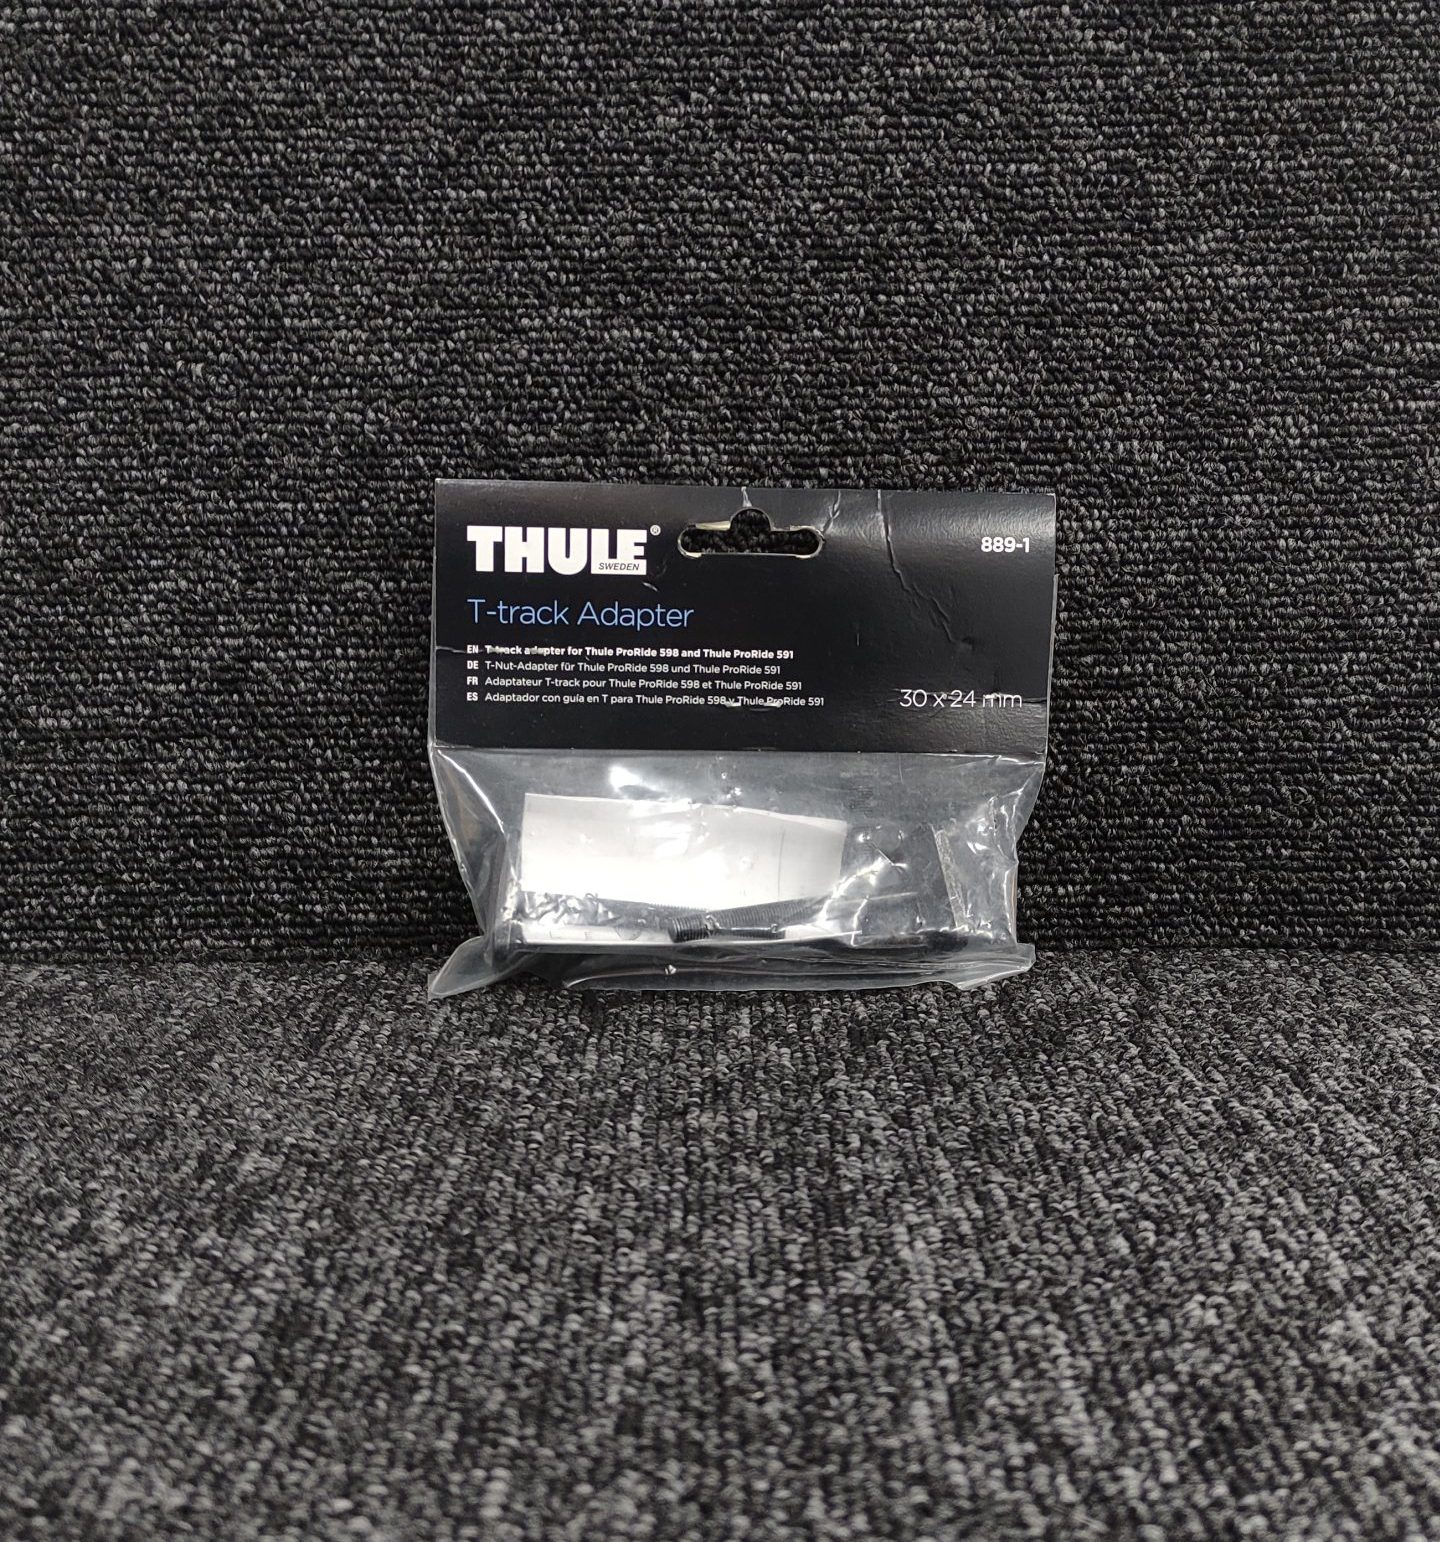 Thule T-track Adapter 889-1, Thule